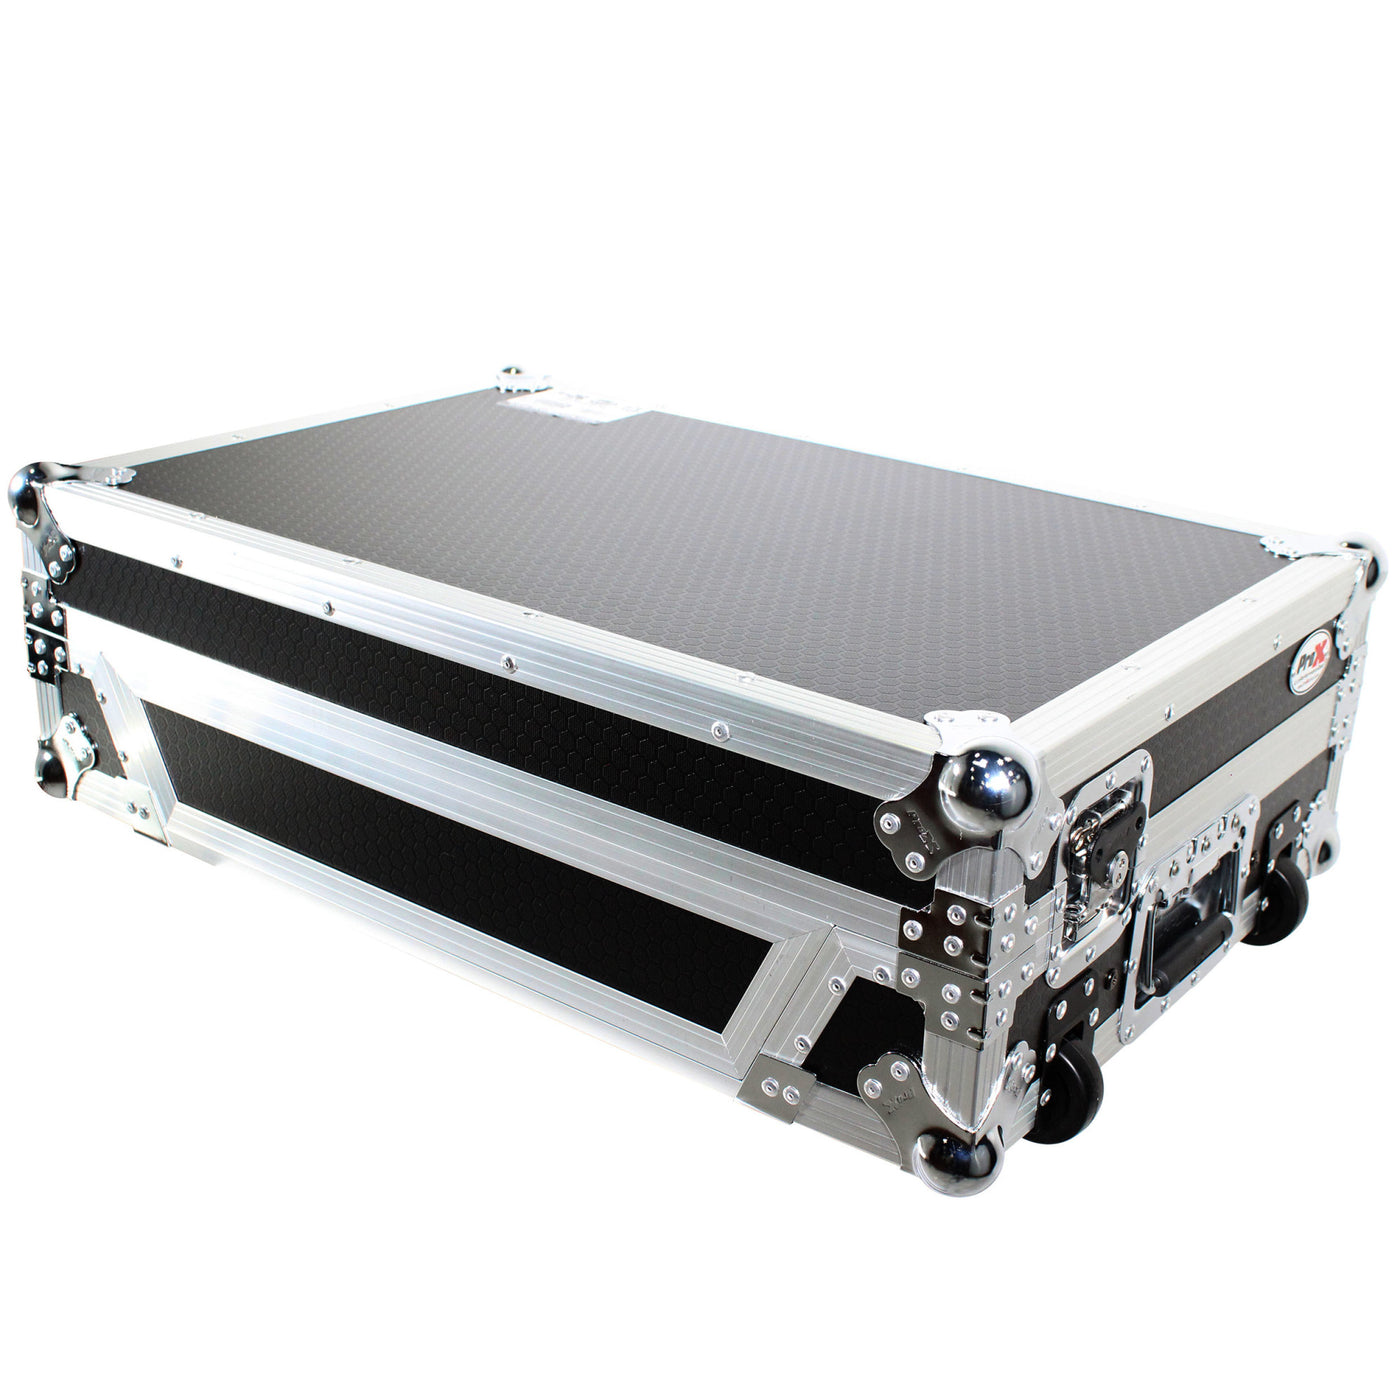 ProX XS-DDJ800WLT Flight Case, For Pioneer DDJ-800 Digital Controller, With 1U Rackspace, Sliding Laptop Shelf and Wheels, Pro Audio Equipment Storage, Silver on Black